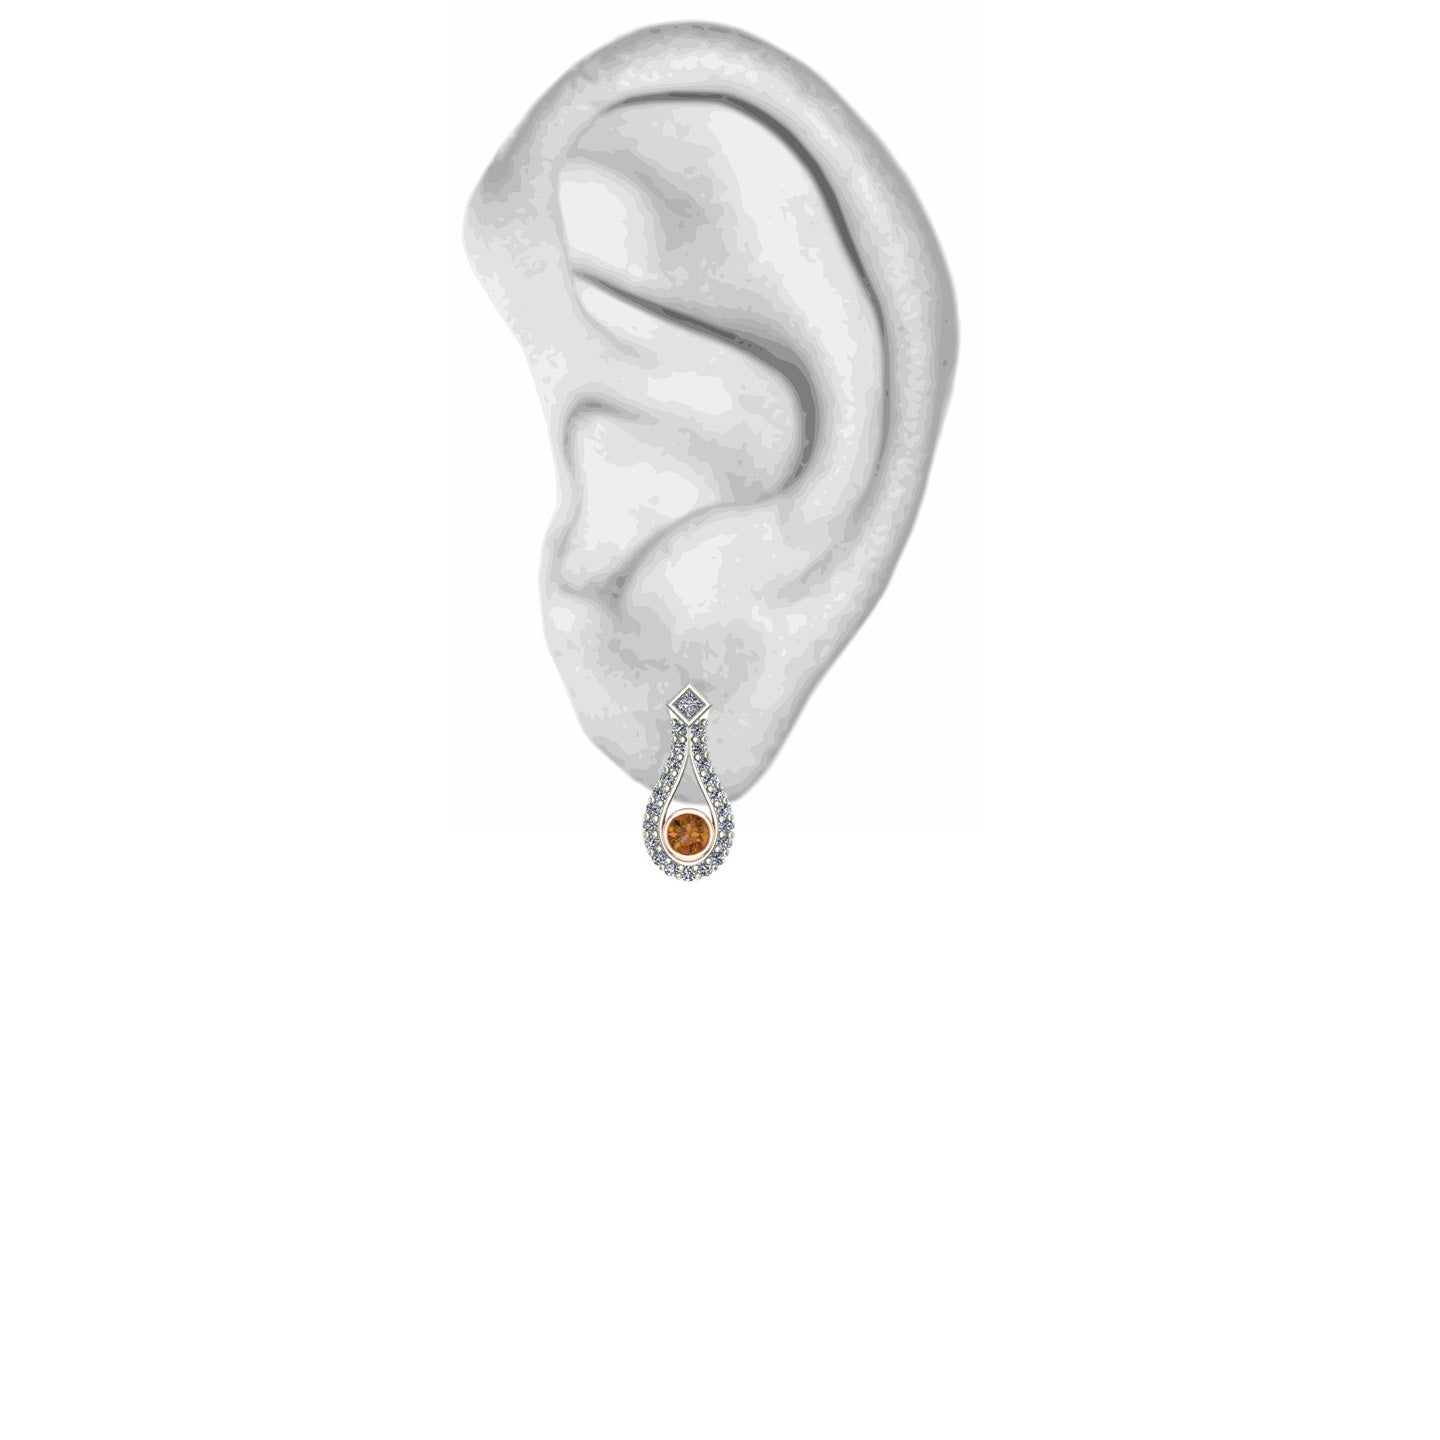 bezel set cognac diamond two tone earrings in 14k rose and white gold - Charles Babb Designs - on ear